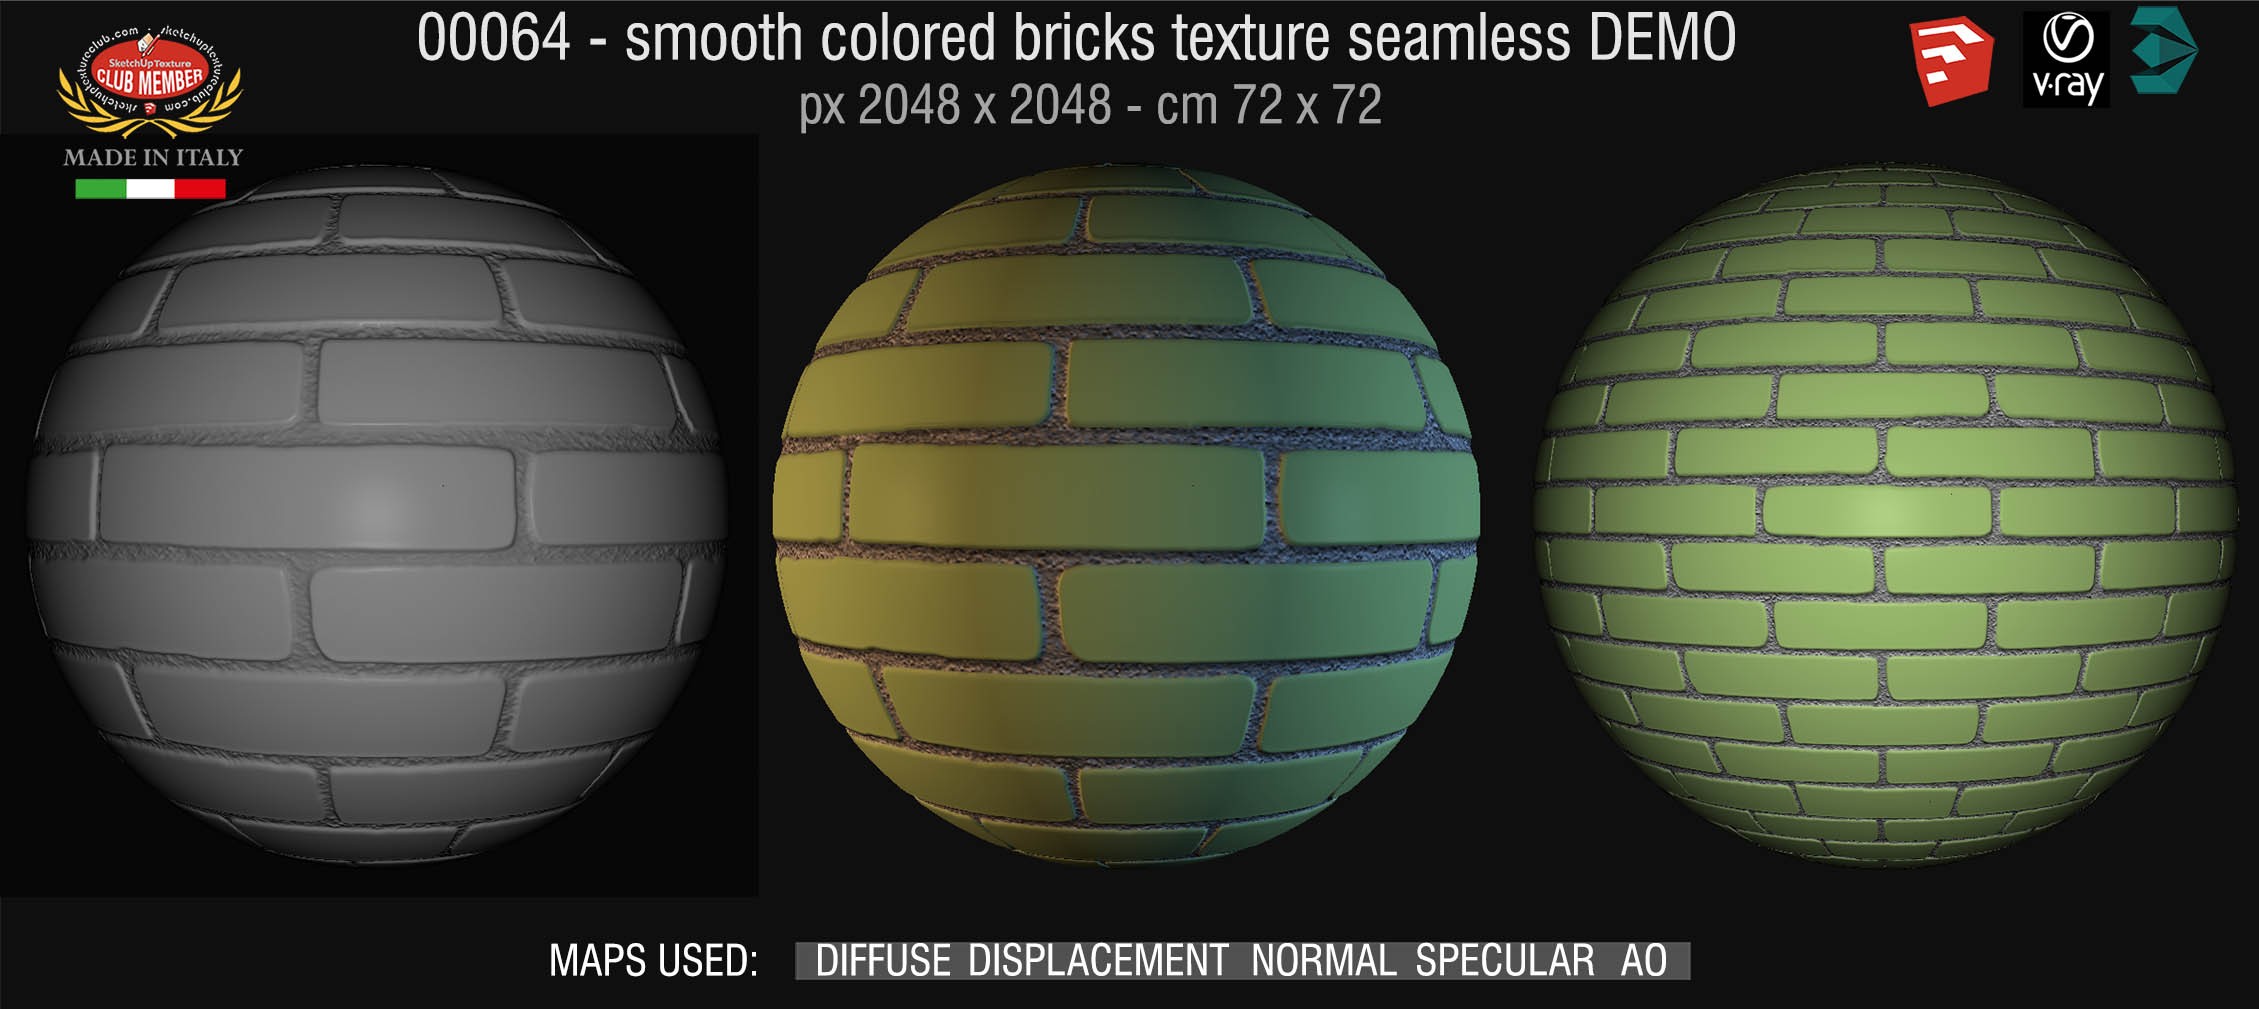 00064 smooth colored bricks texture seamless + maps DEMO